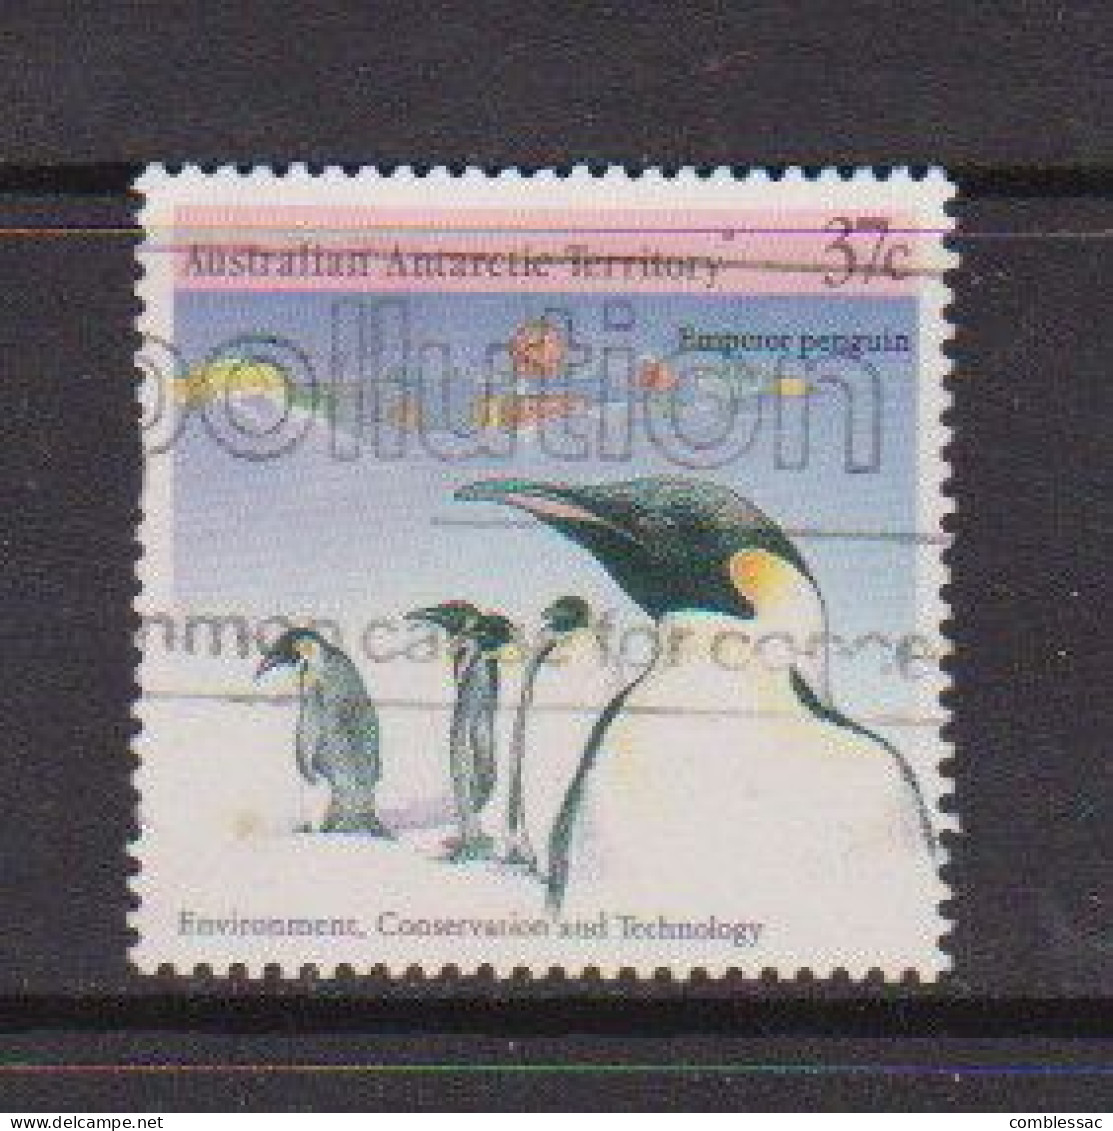 AUSTRALIAN  ANTARCTIC  TERRITORY    1988    Enviroment  Conservation    37c  Penguins    USED - Usados